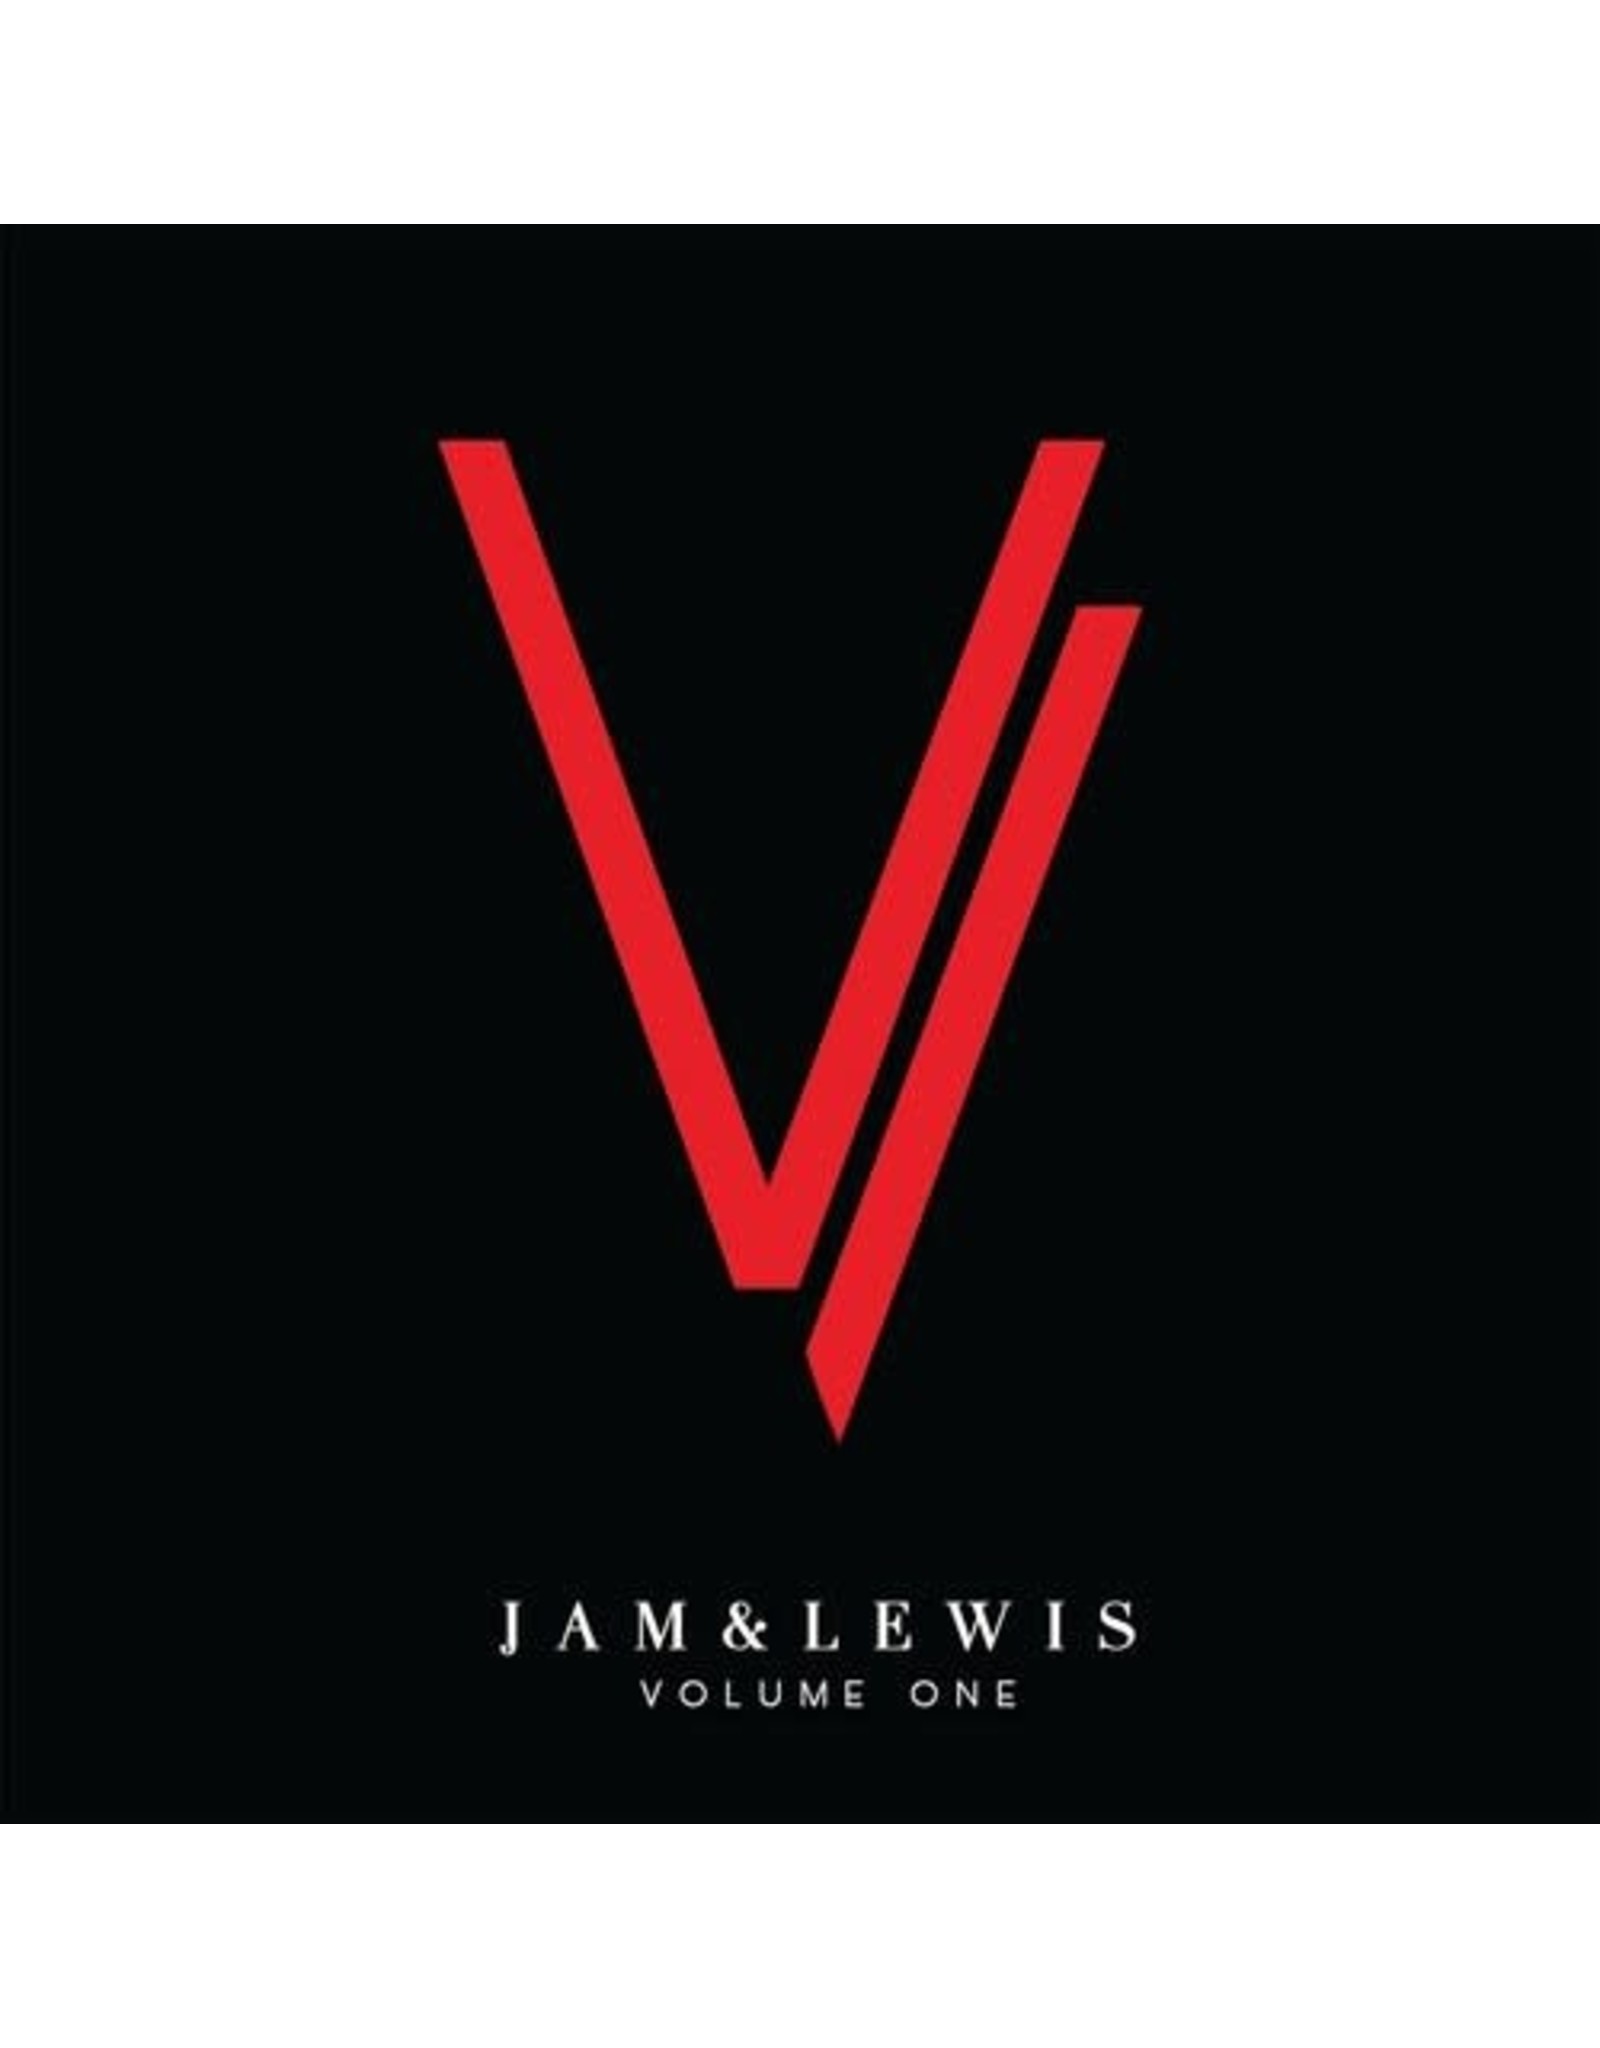 New Vinyl Jam & Lewis - Volume One LP